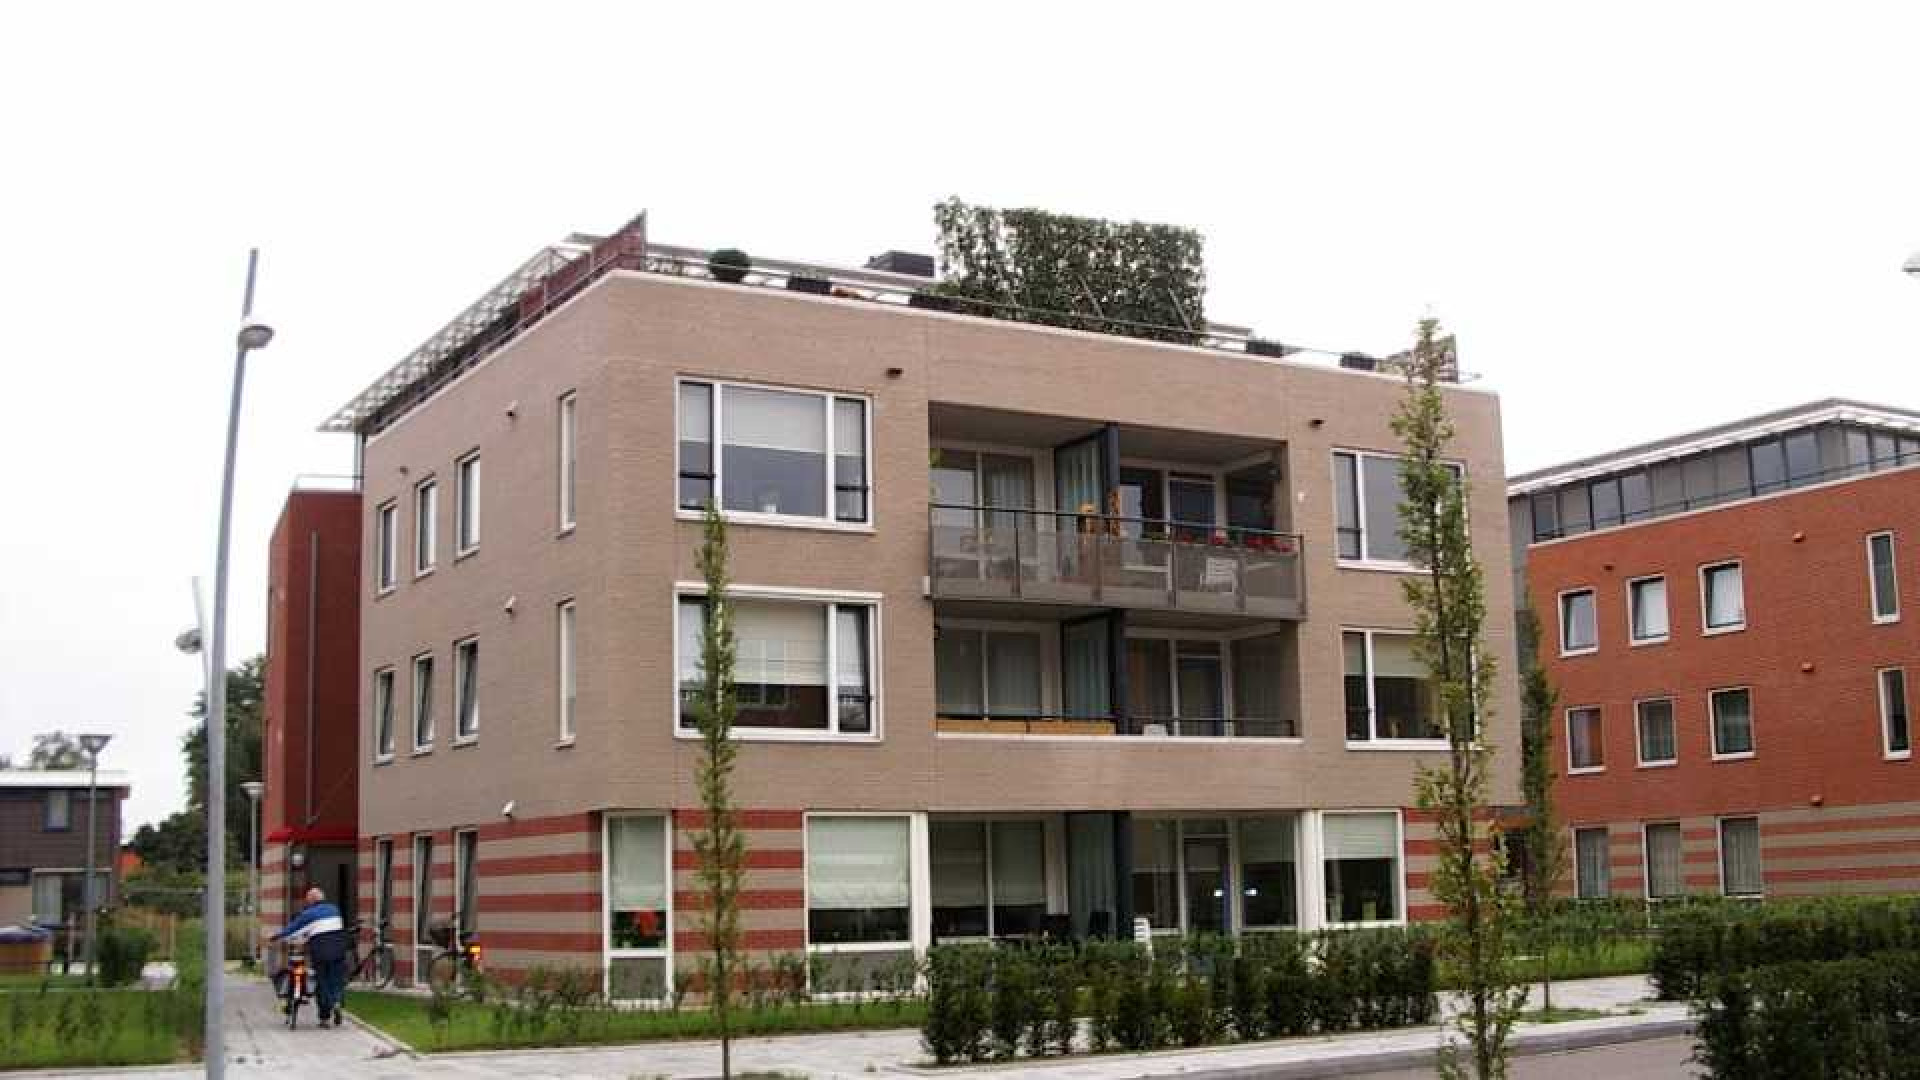 Ernst Daniel Smid huurt penthouse in Barneveld. Zie foto. 1